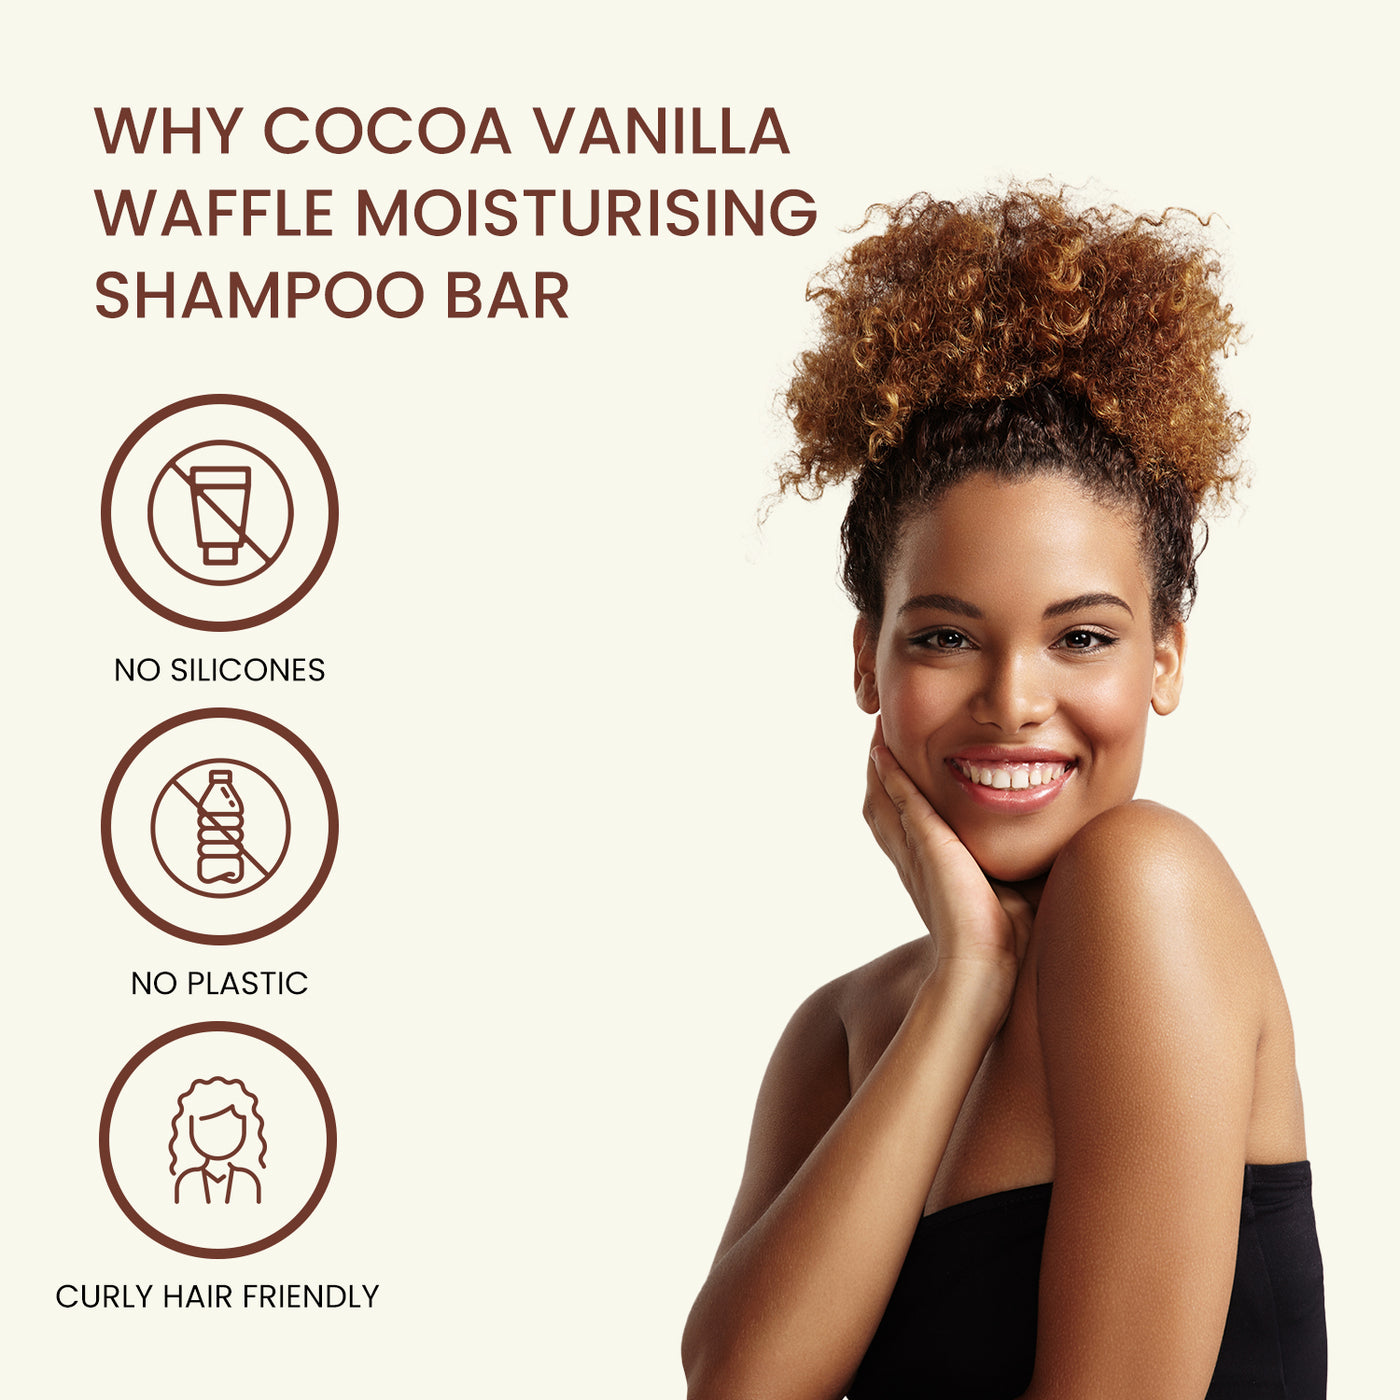 Cocoa Vanilla Waffle Moisturising Shampoo bar